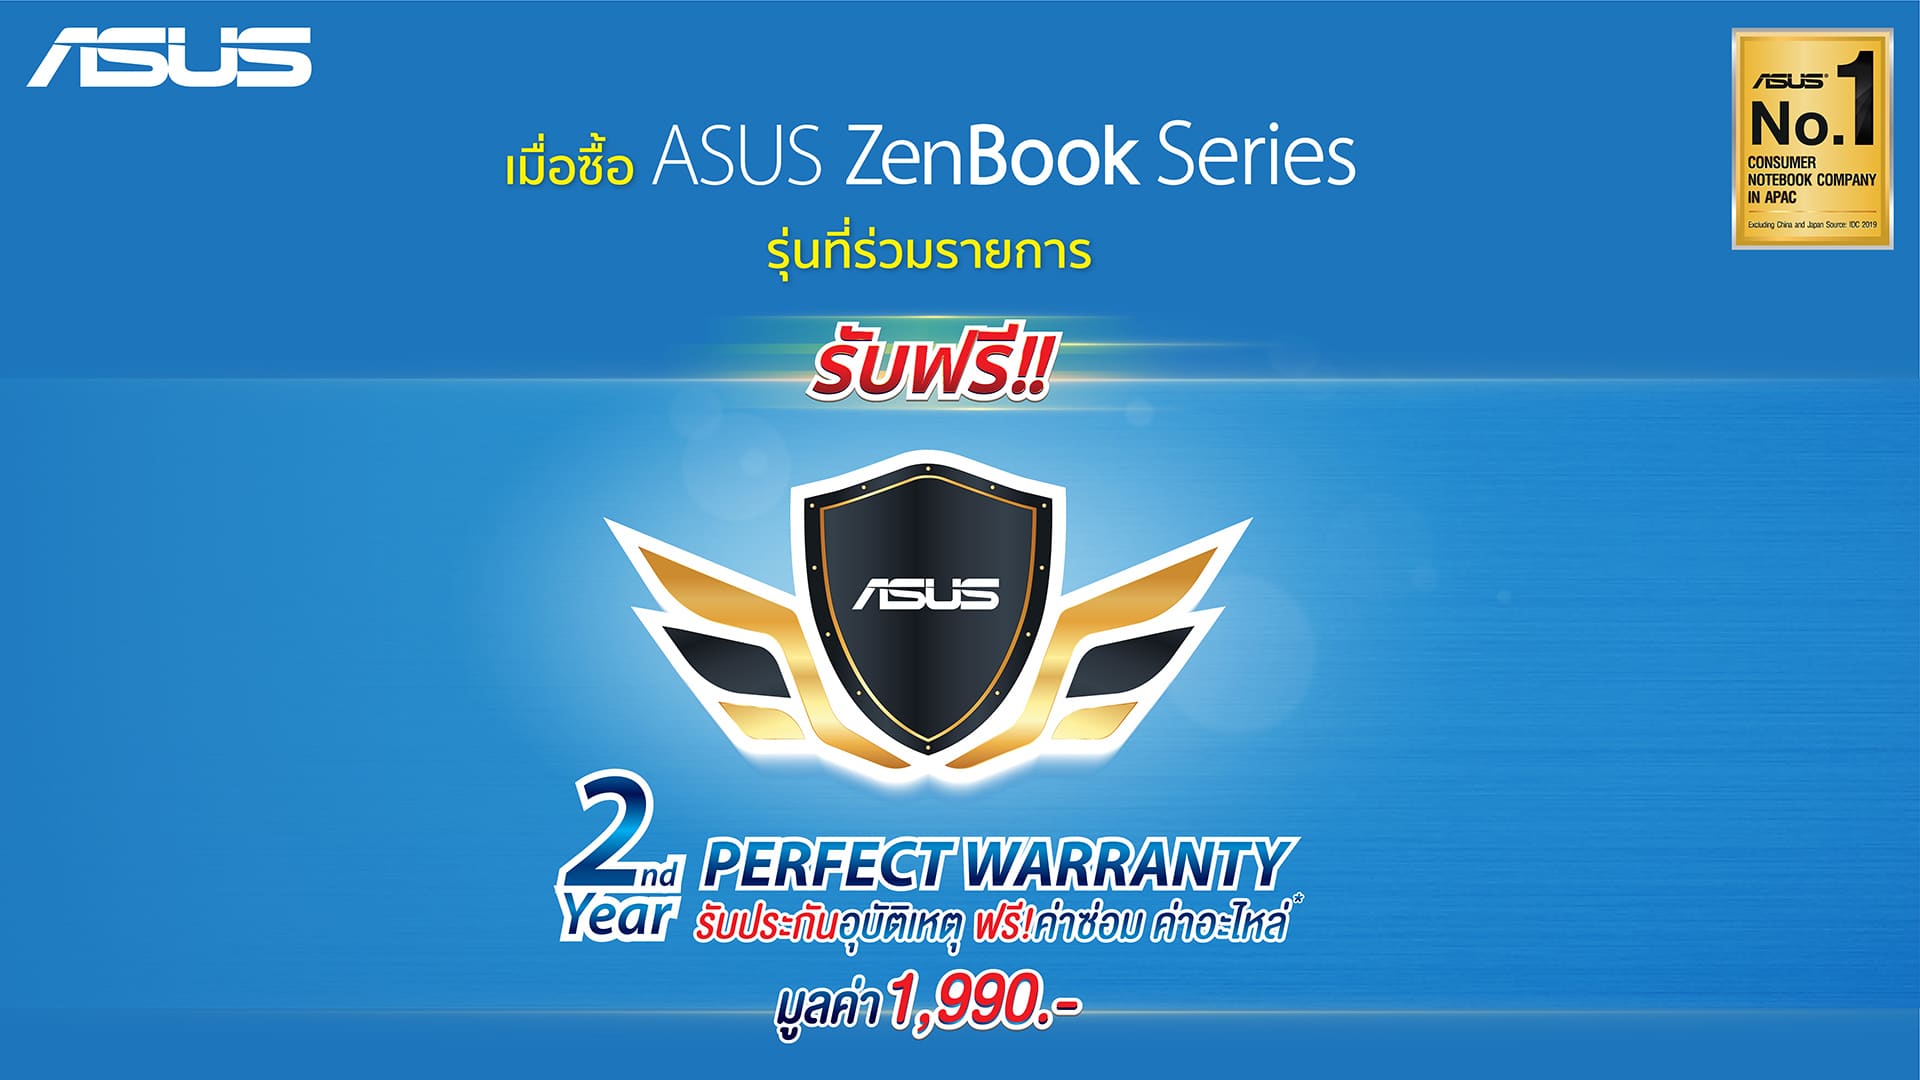 ASUS ส่งโปรโมชั่นสุดว้าวสำหรับแฟนๆ Asus ZenBook Series 1